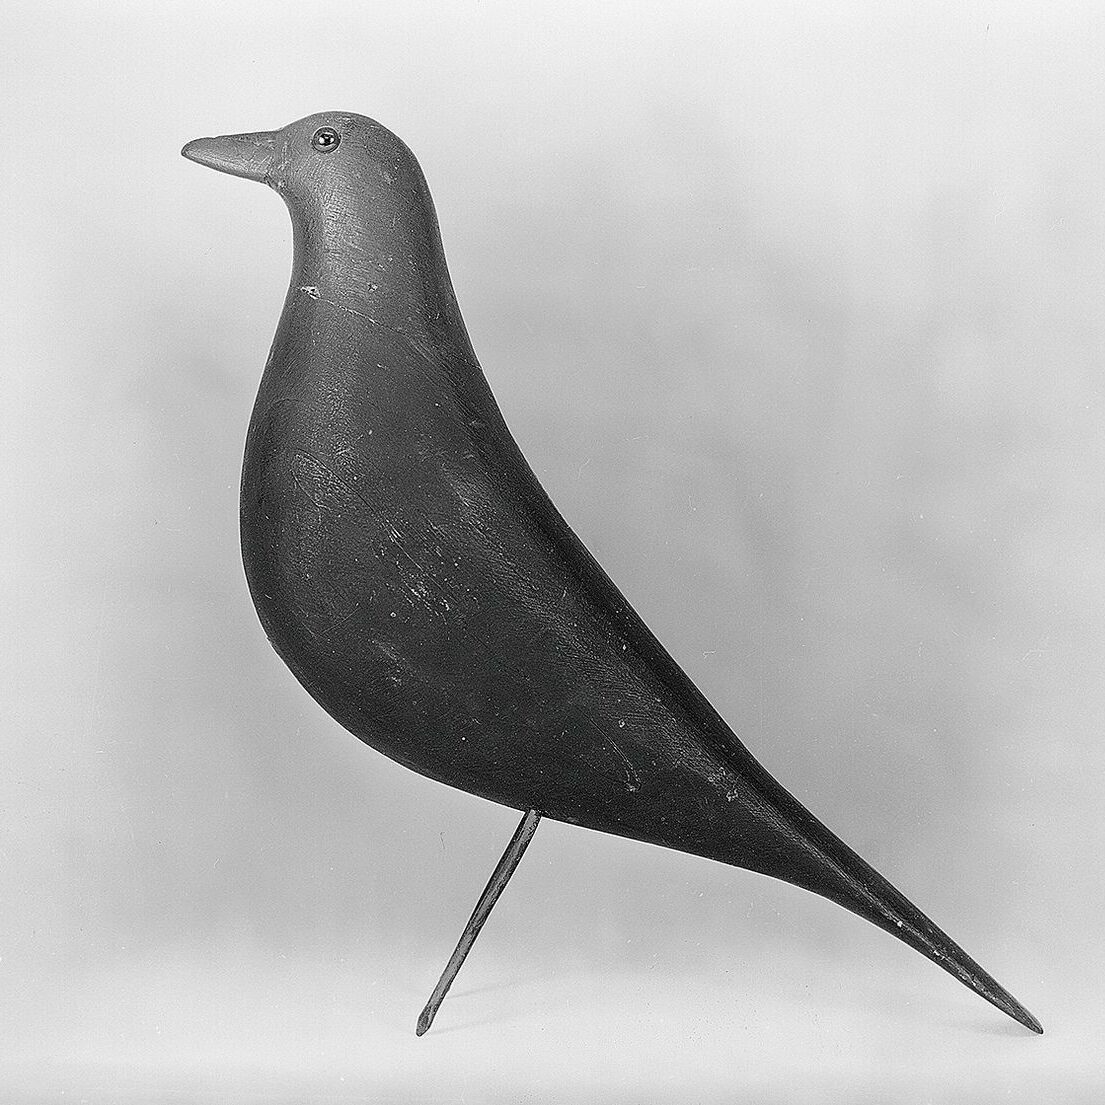 Eames house Bird: Toda la Historia de un pajarito icónico